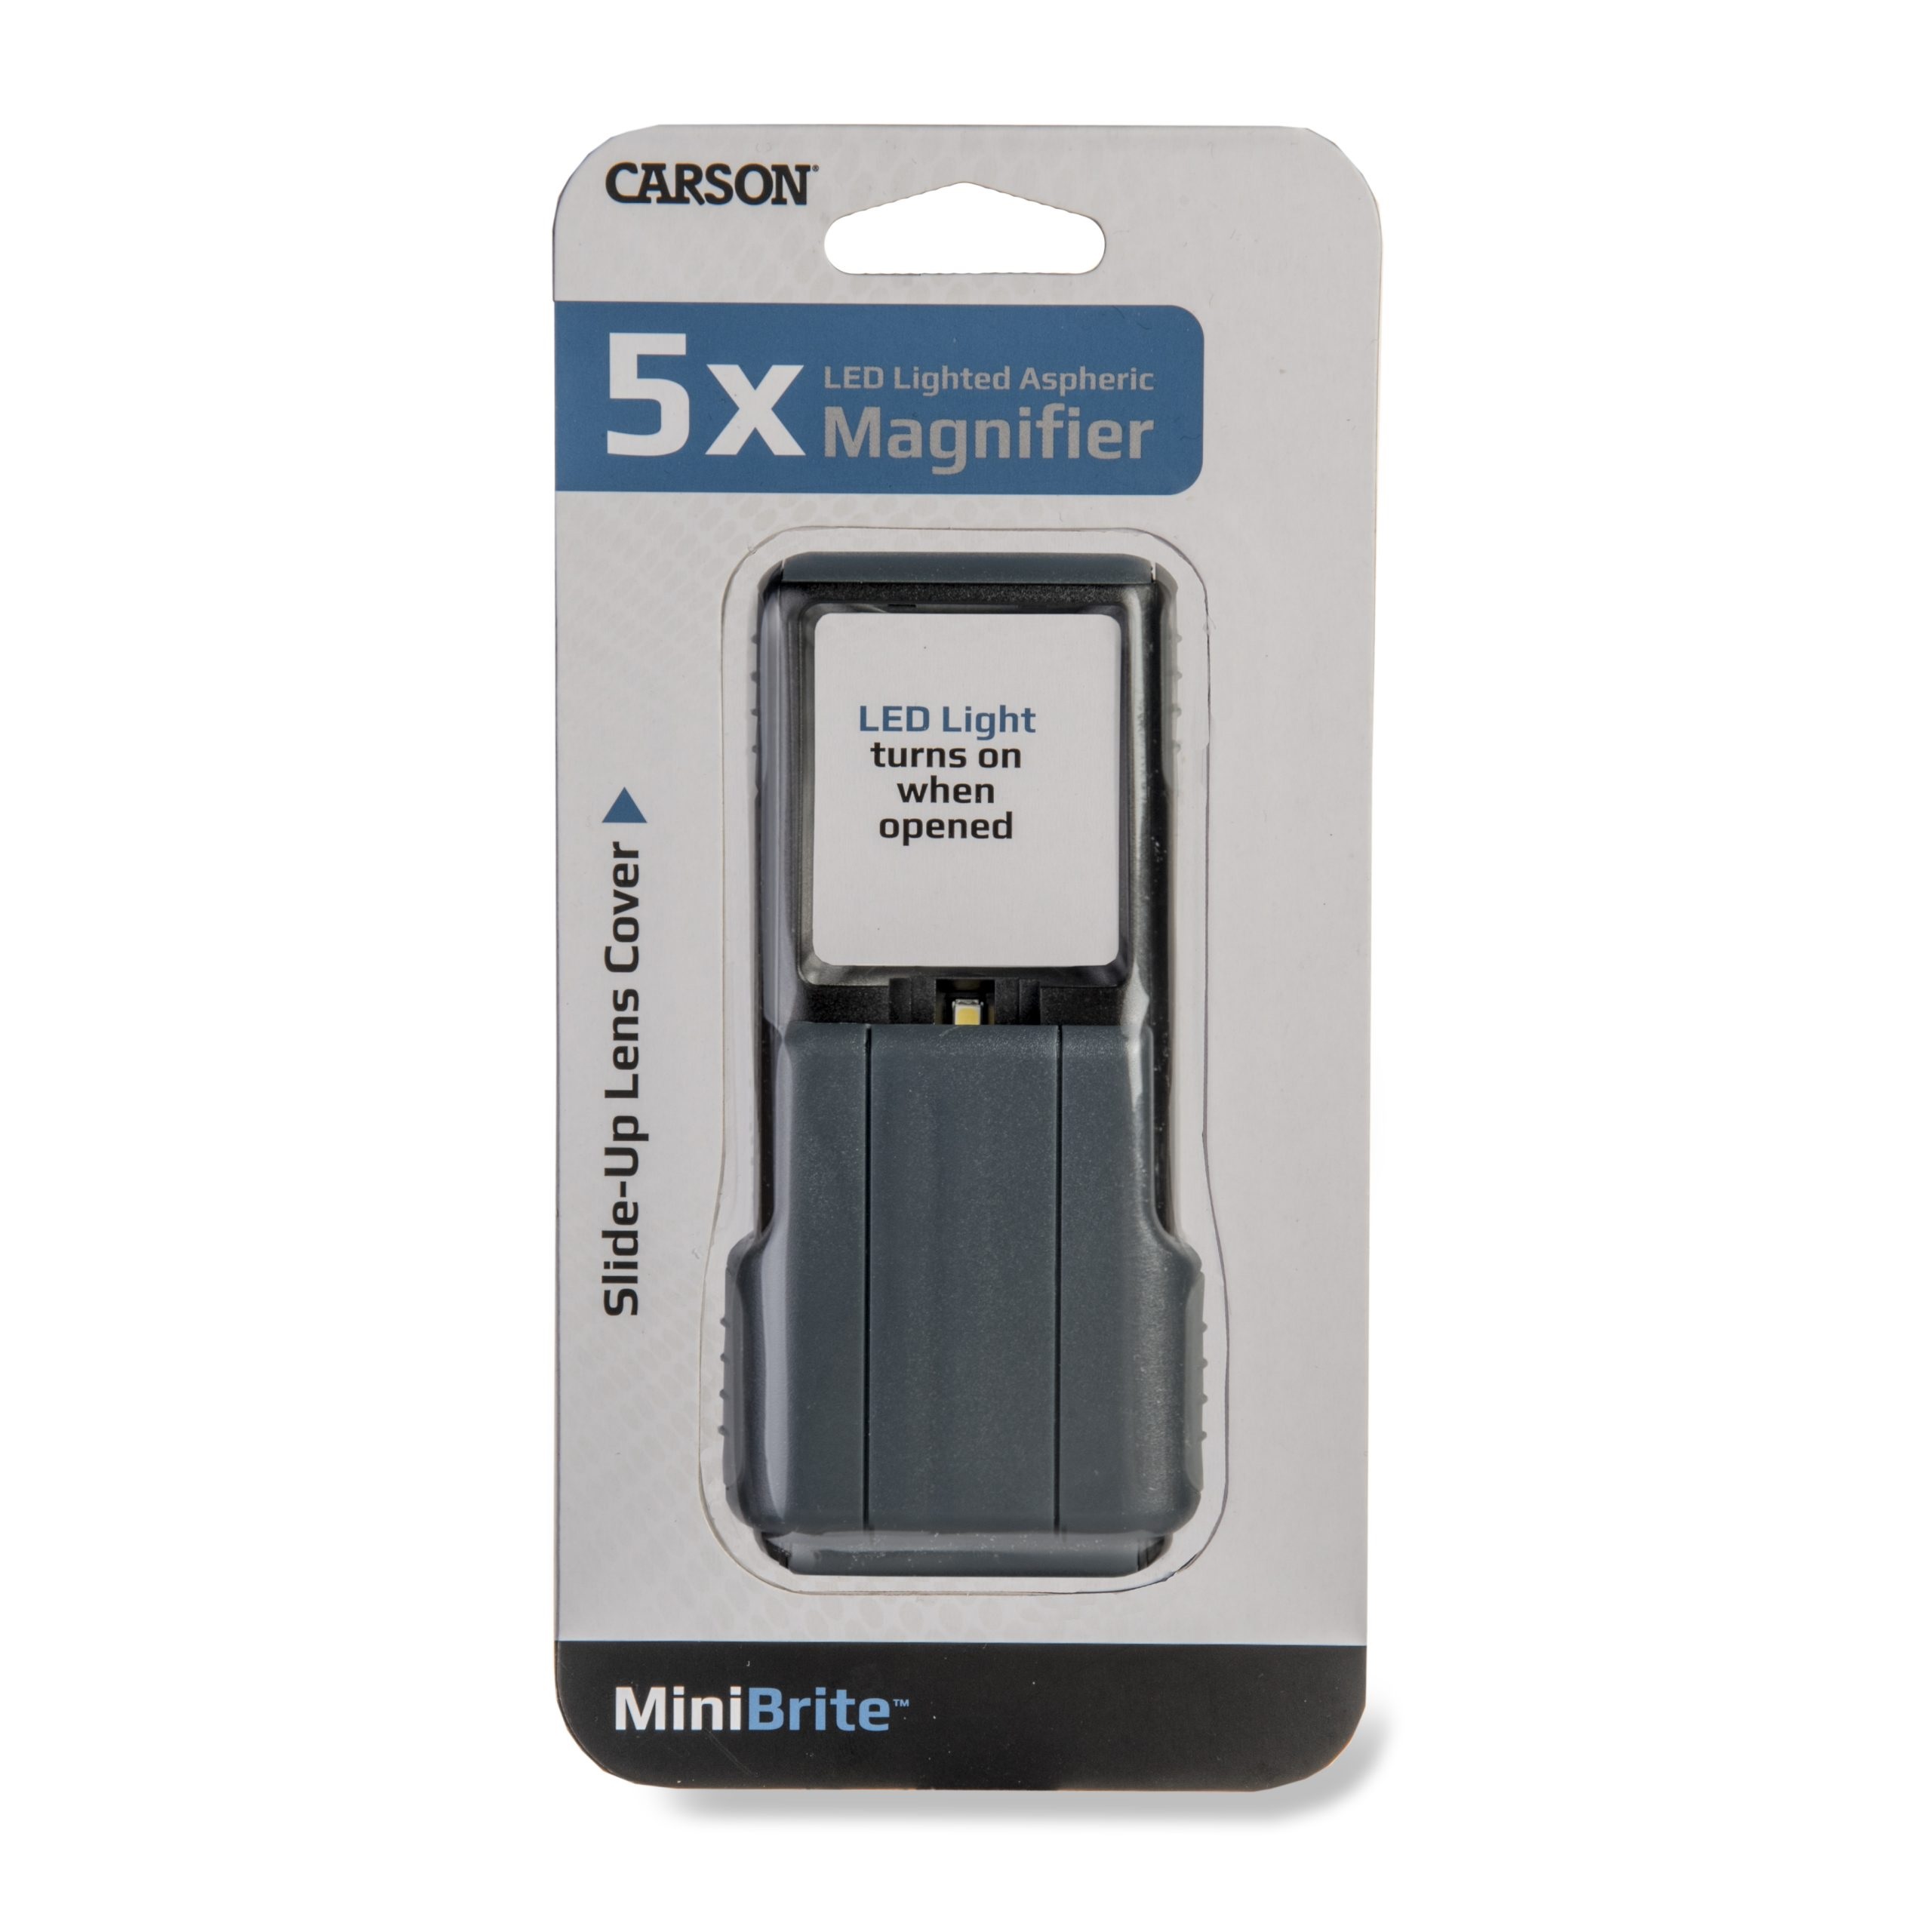 Carson MiniBrite Slide-out Magnifier